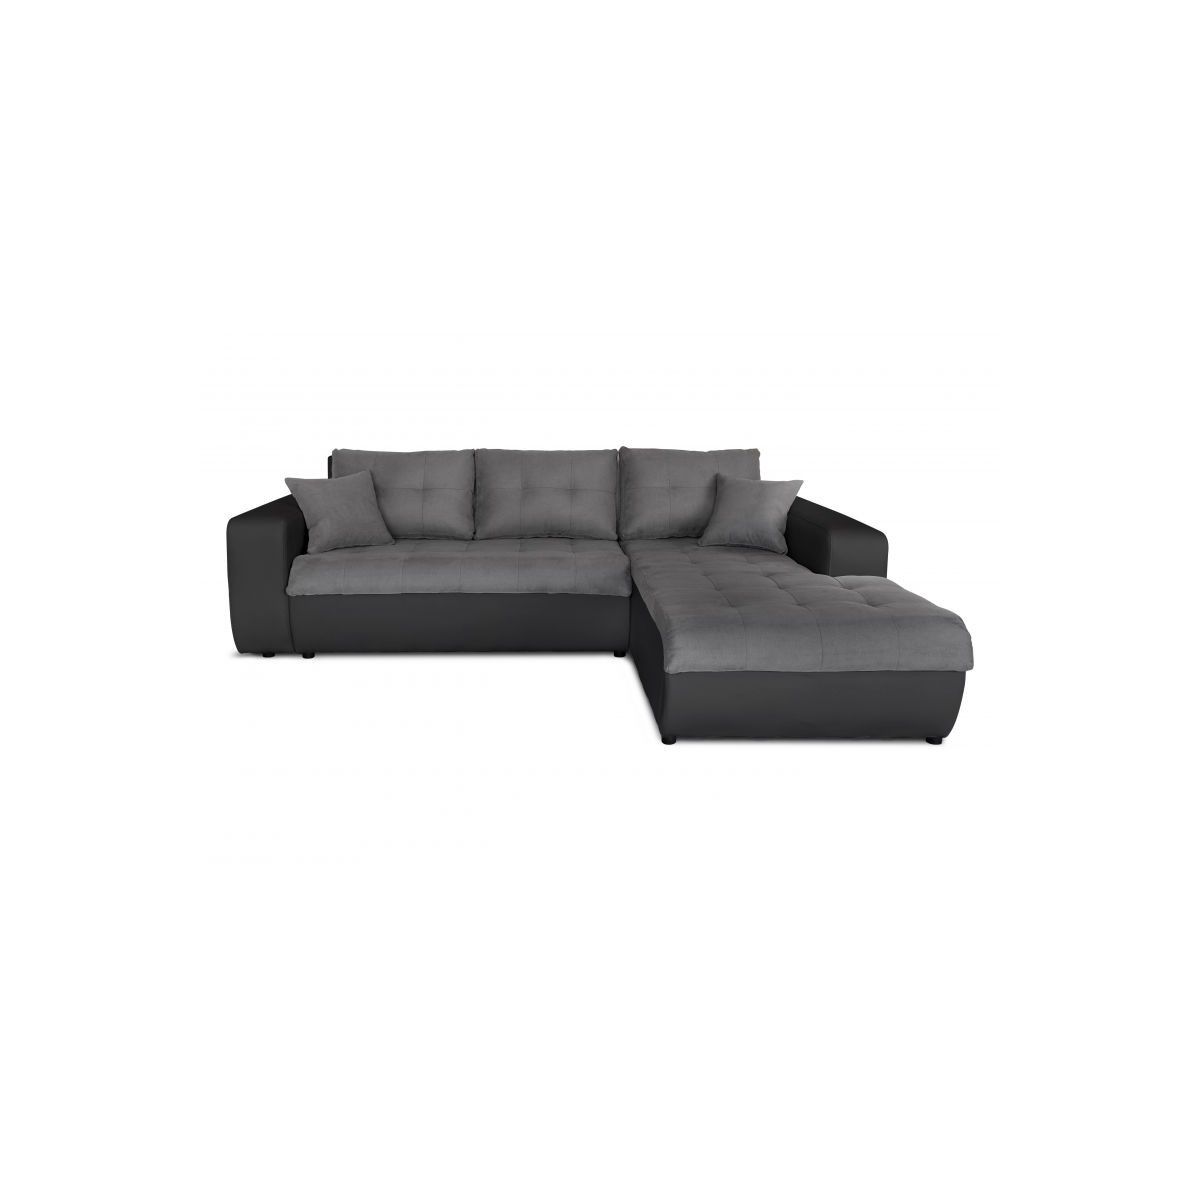 Convertible Corner Sofa 4 Places Imitation And Microfiber Right Angle Bond  (grey, Black) – Amp Story 8794 Regarding Microfiber Sectional Corner Sofas (View 4 of 15)